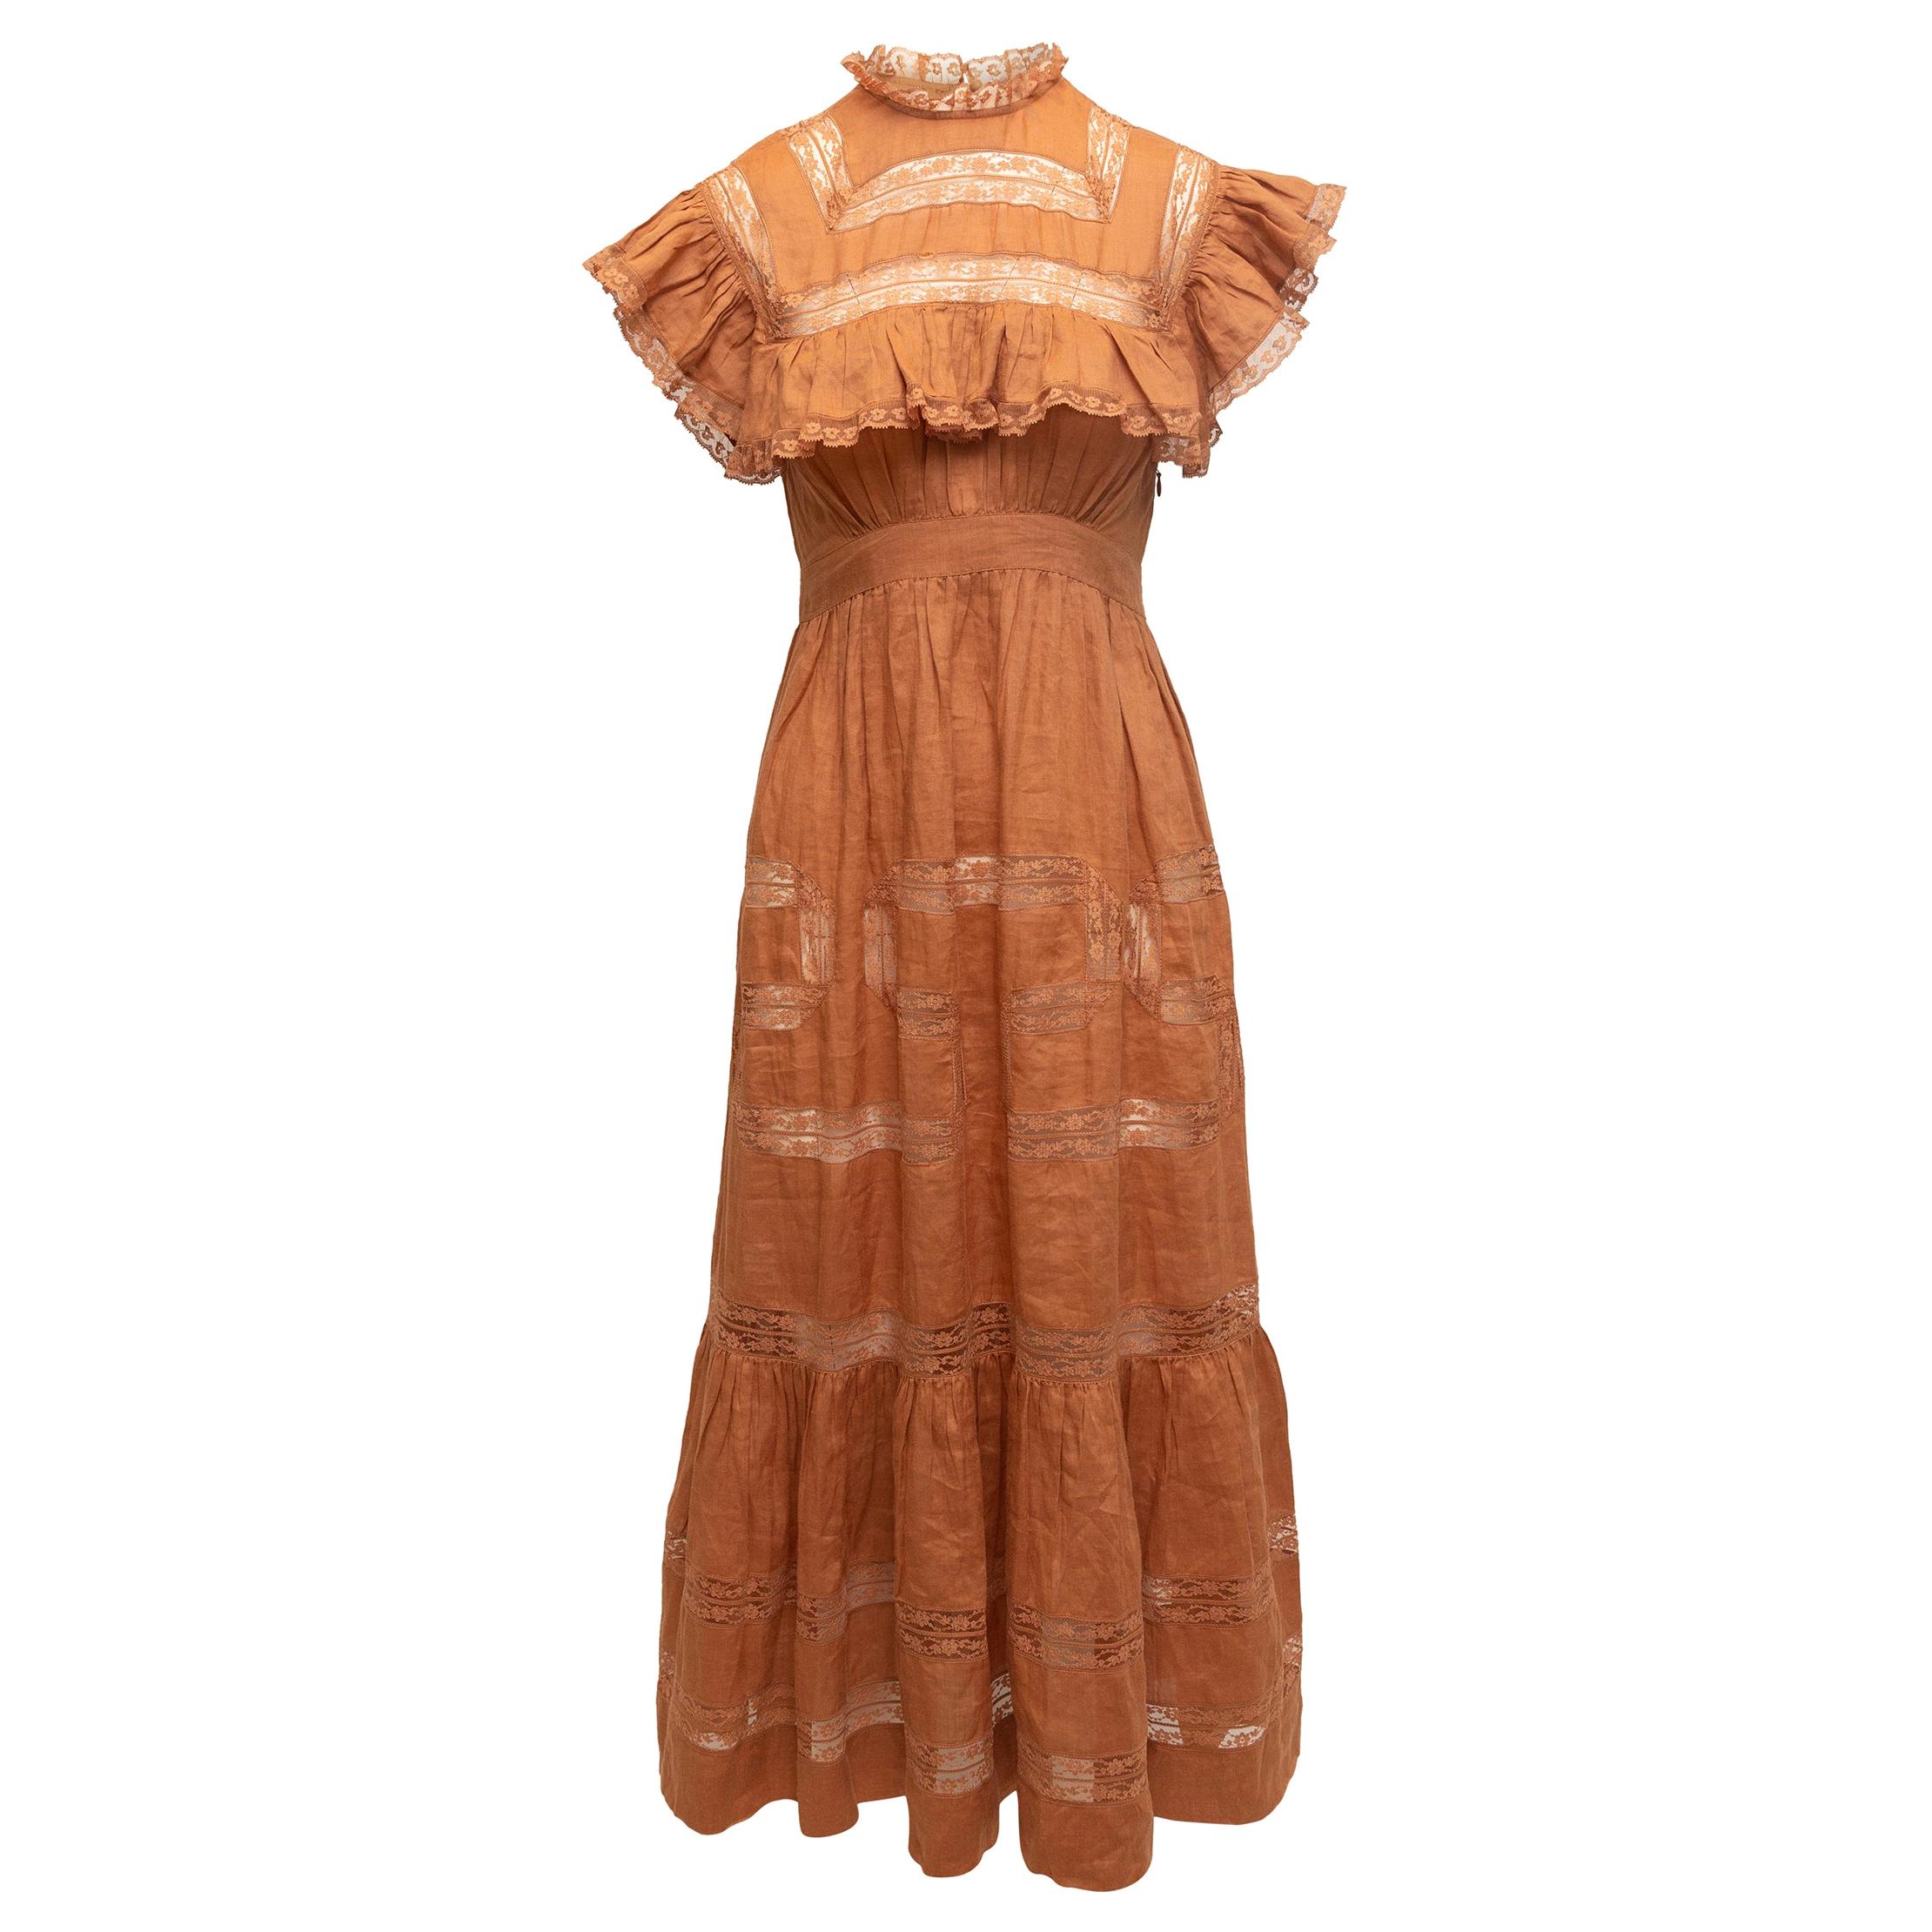 Doen Tan Lace-Trimmed Prairie Dress